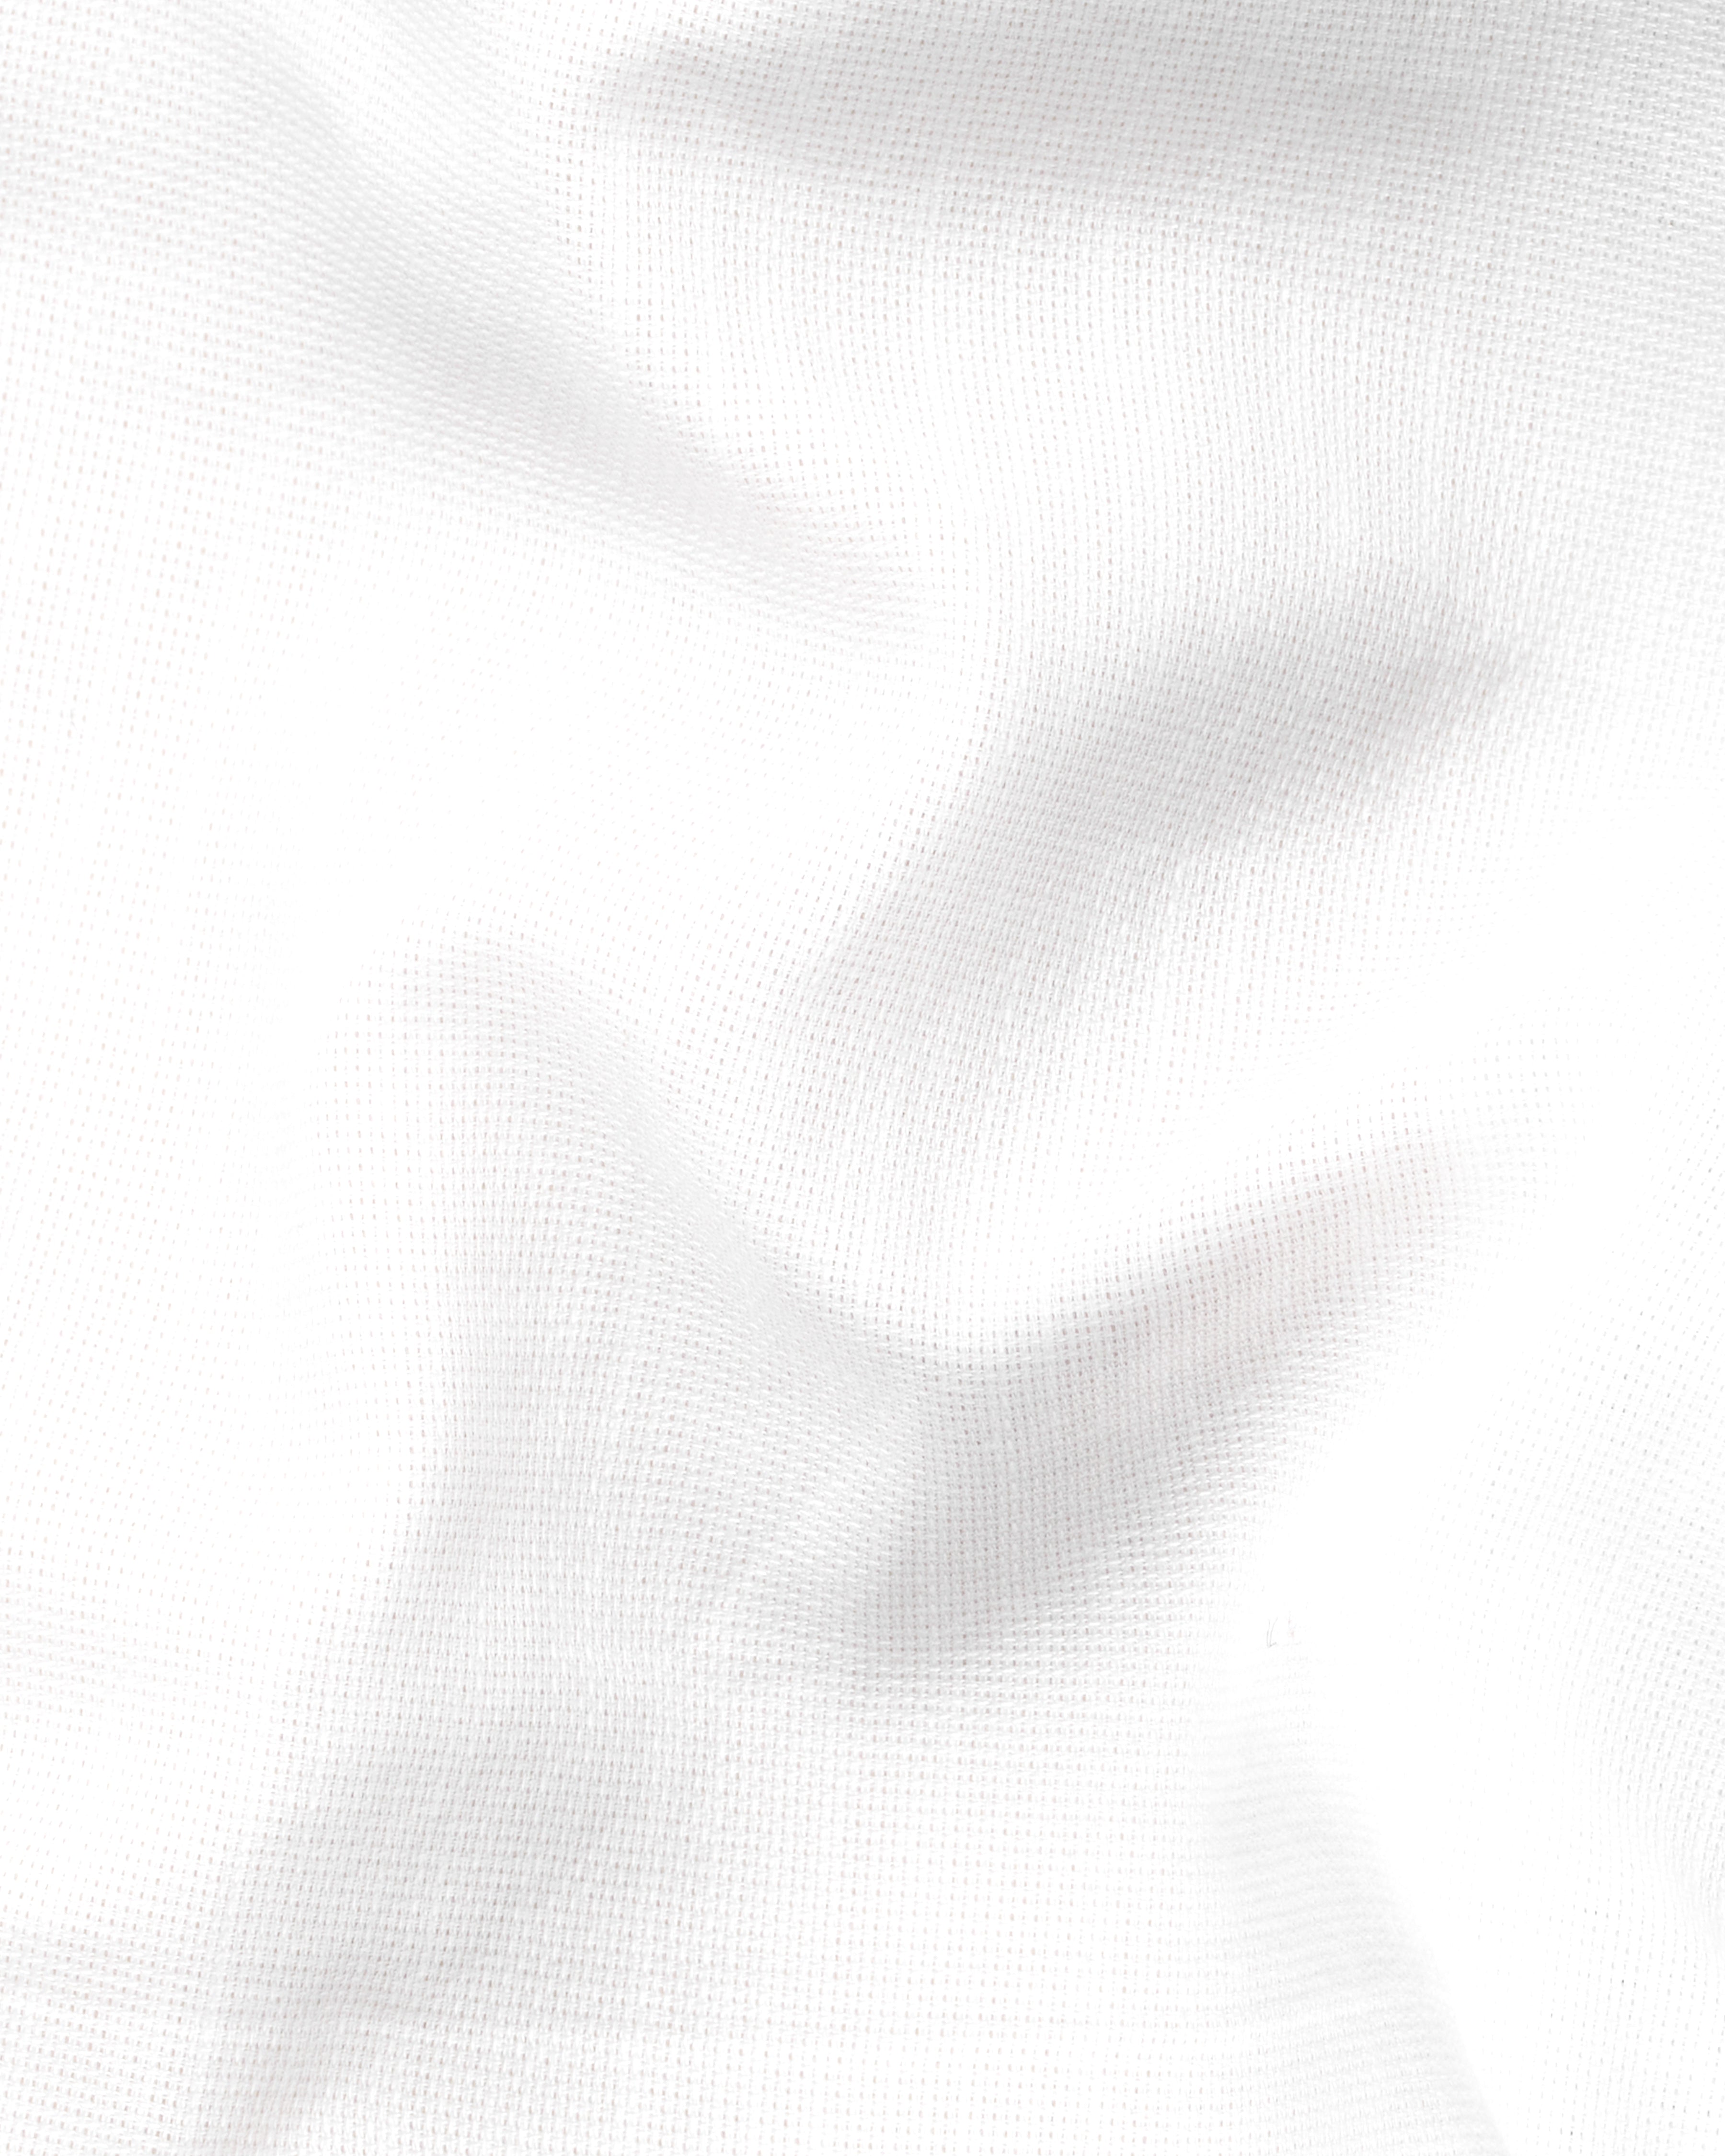 Bright White Dobby Textured Giza Cotton Shorts SR226-28, SR226-30, SR226-32, SR226-34, SR226-36, SR226-38, SR226-40, SR226-42, SR226-44